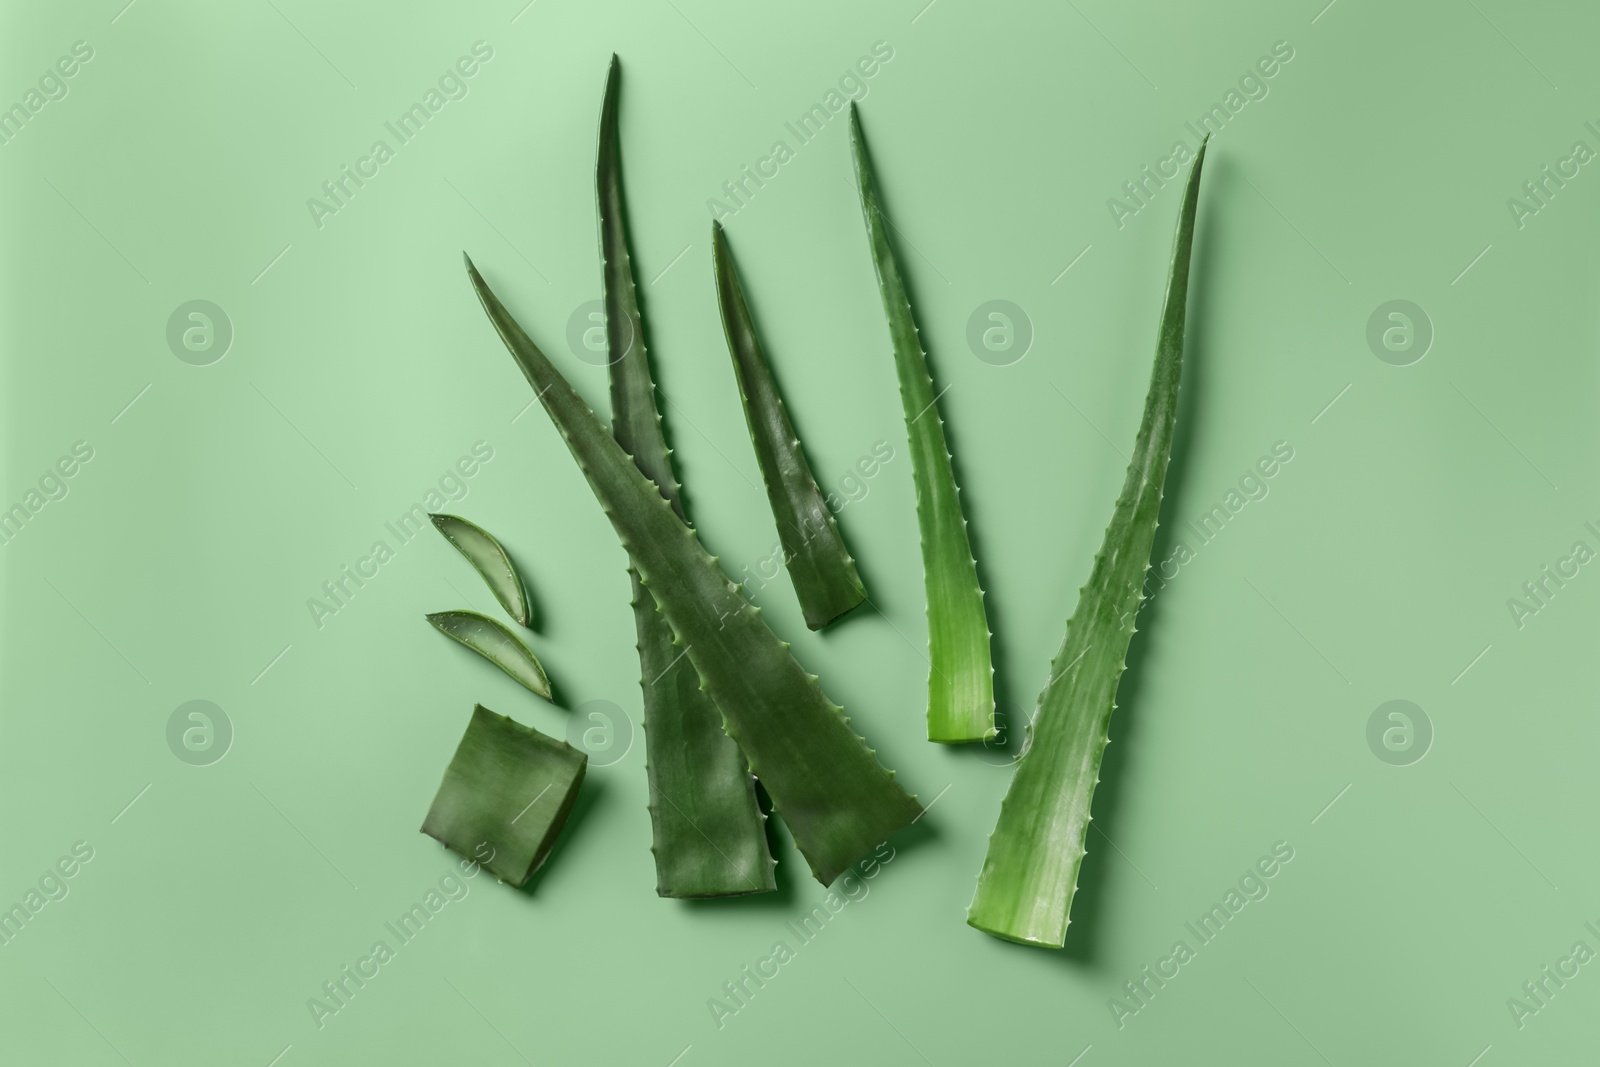 Photo of Cut aloe vera plant on light green background, flat lay